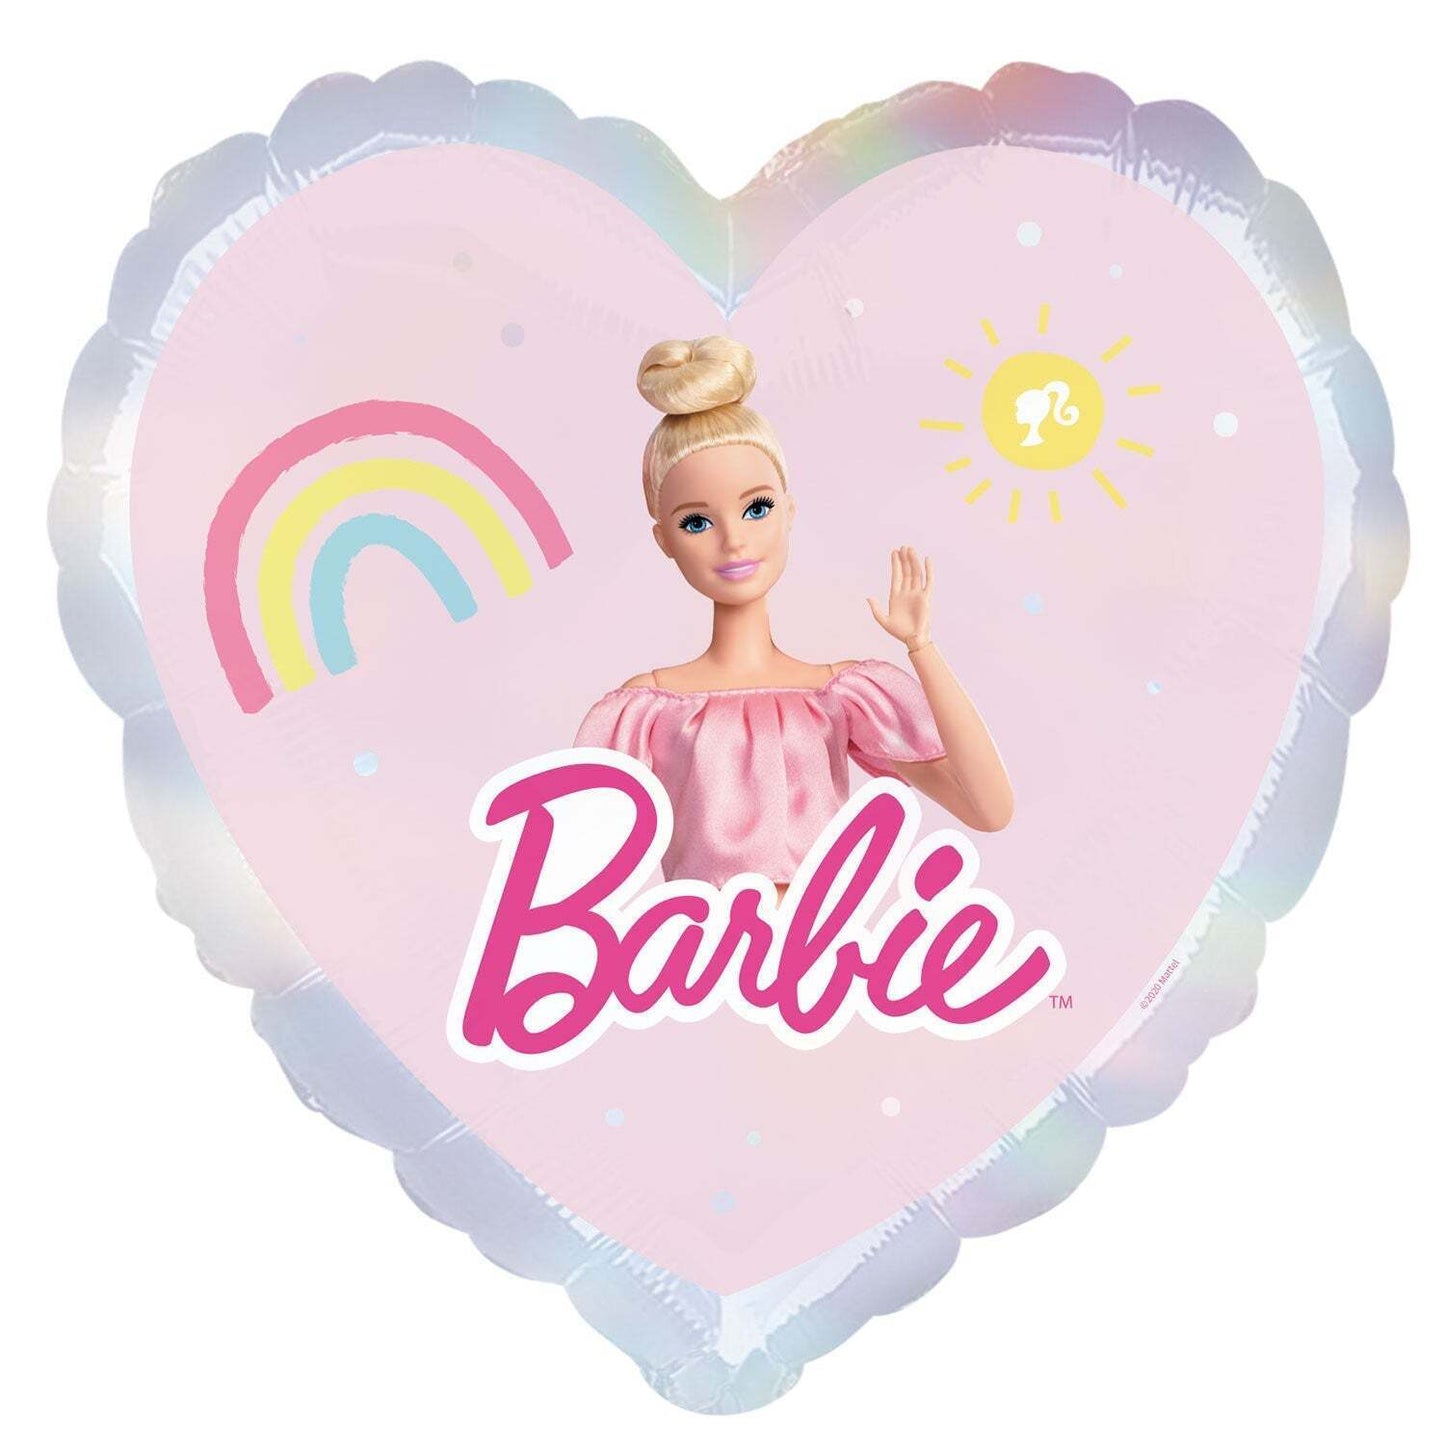 Barbie Heart 18 Inch Foil Balloon Sold: Single Approx. size: 43cm / 18 in